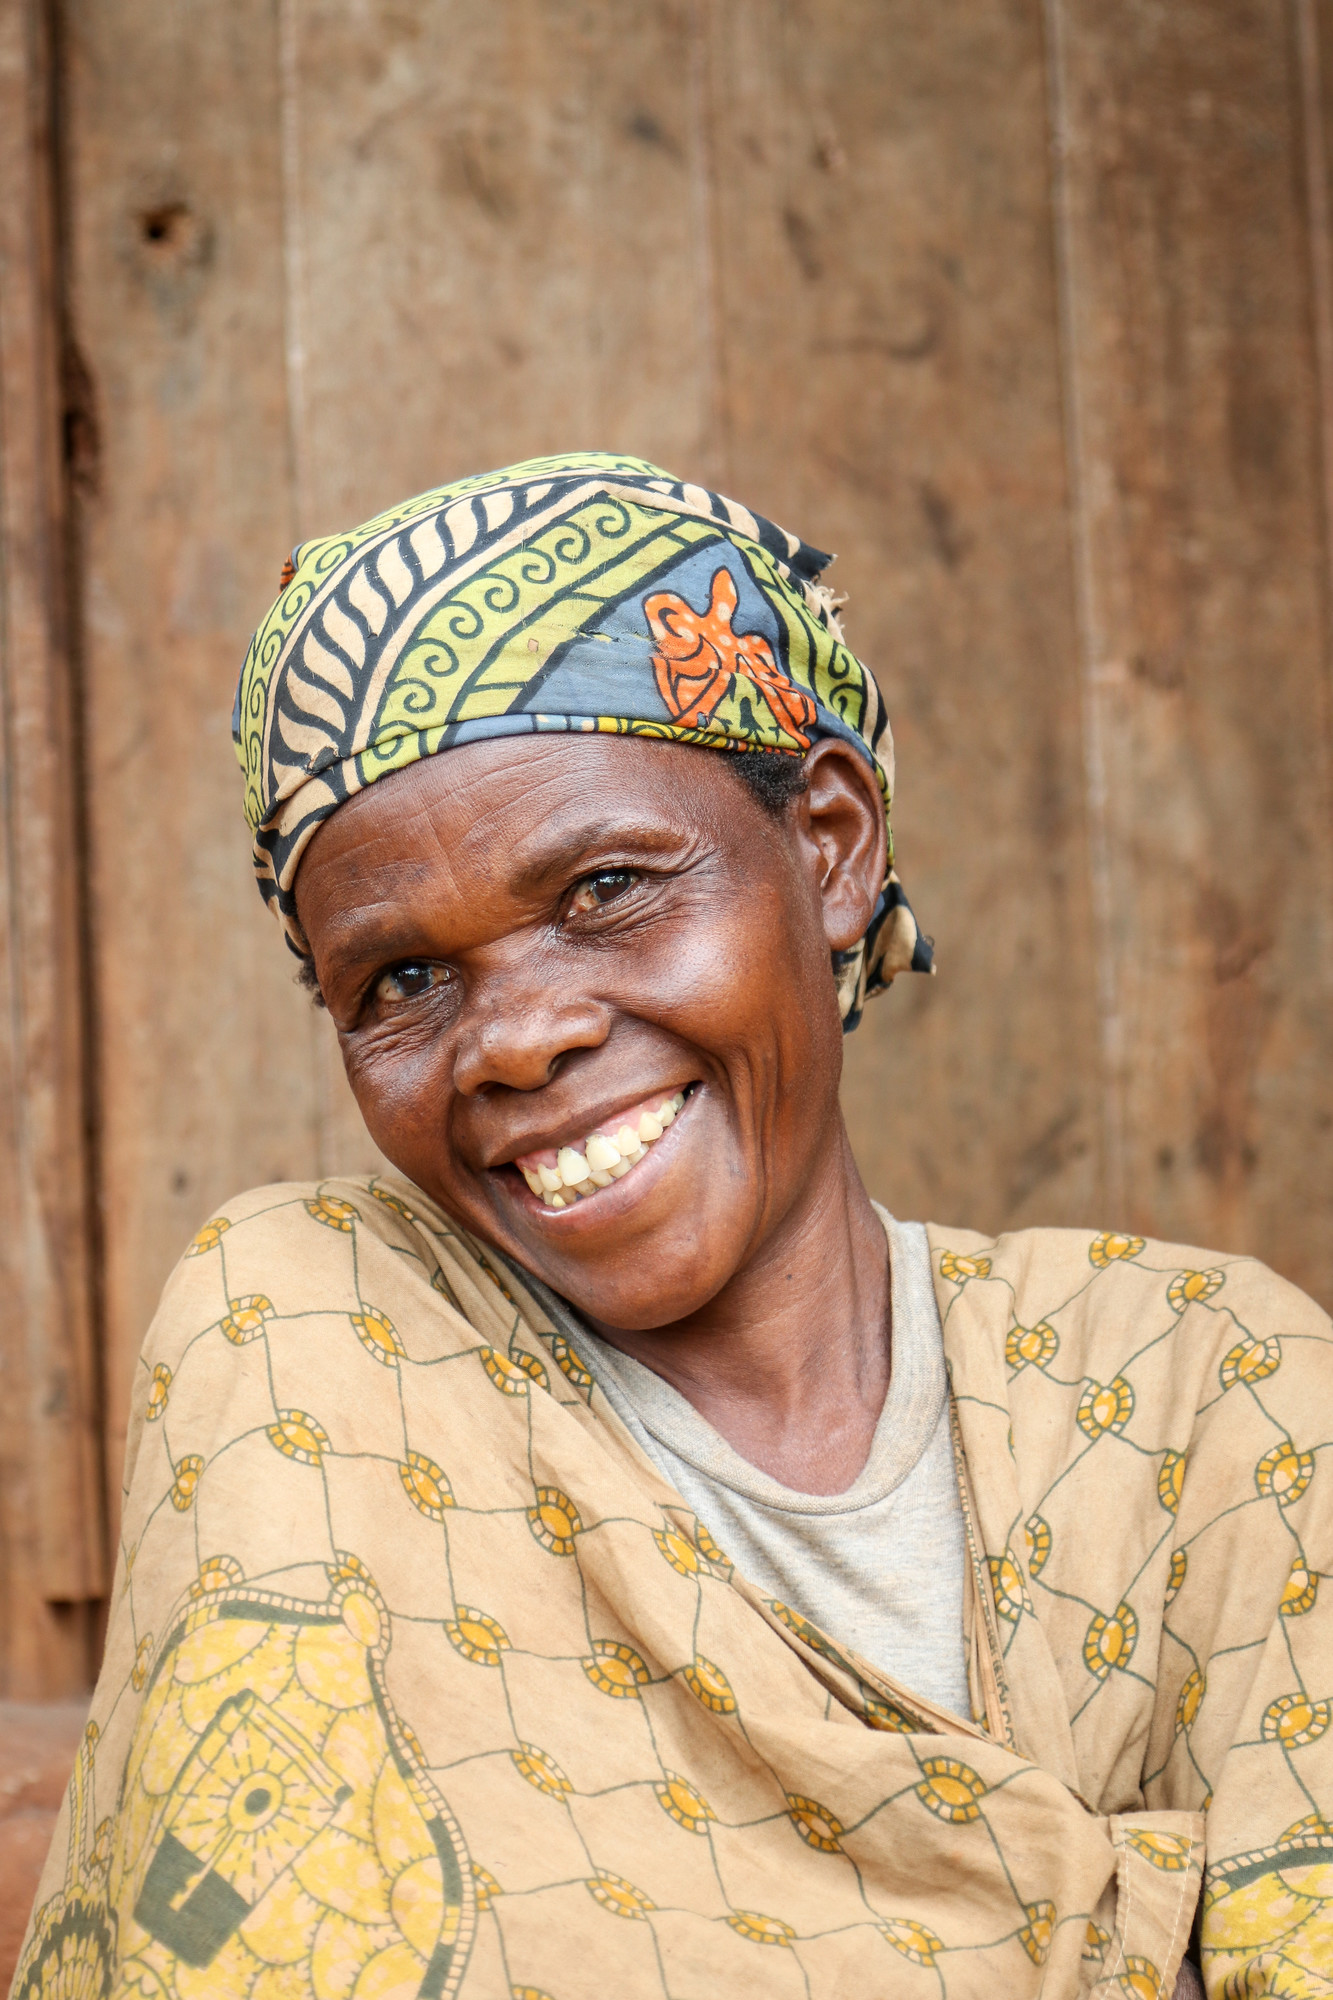 A portrait of a Burundi woman smiling